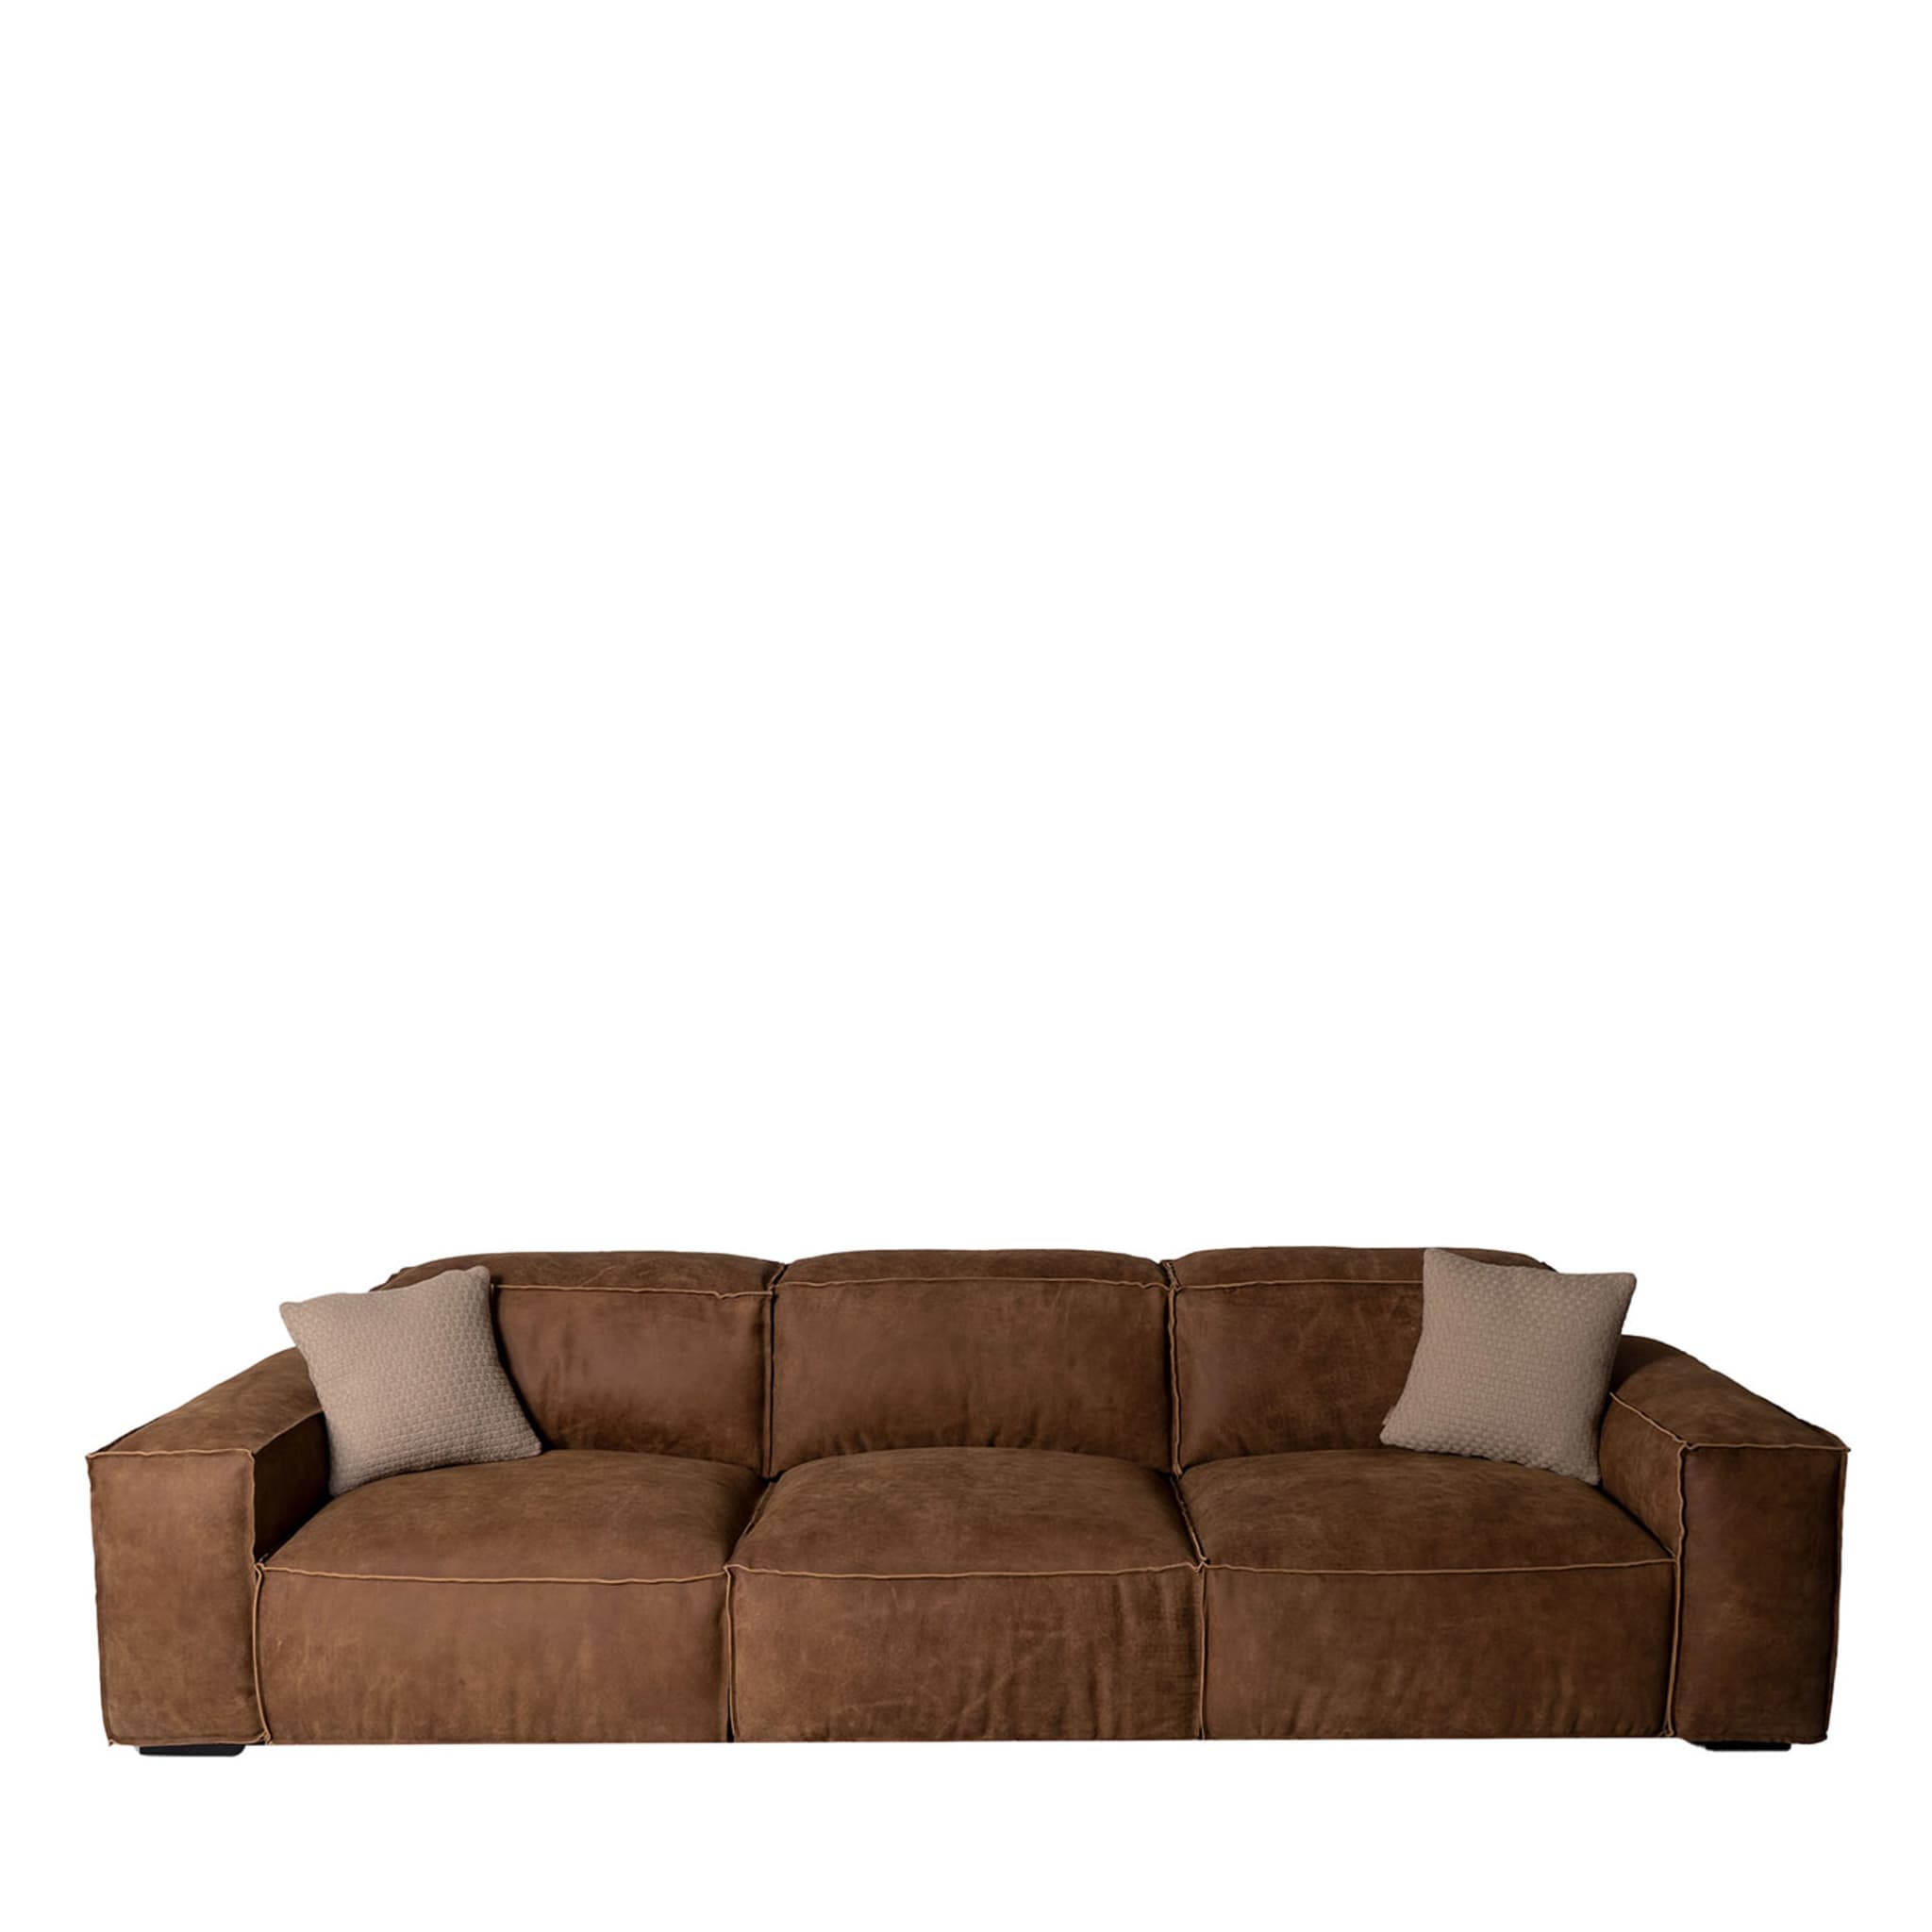 Placido 3 Seater Sofa Maxi Tribeca Collection - Main view